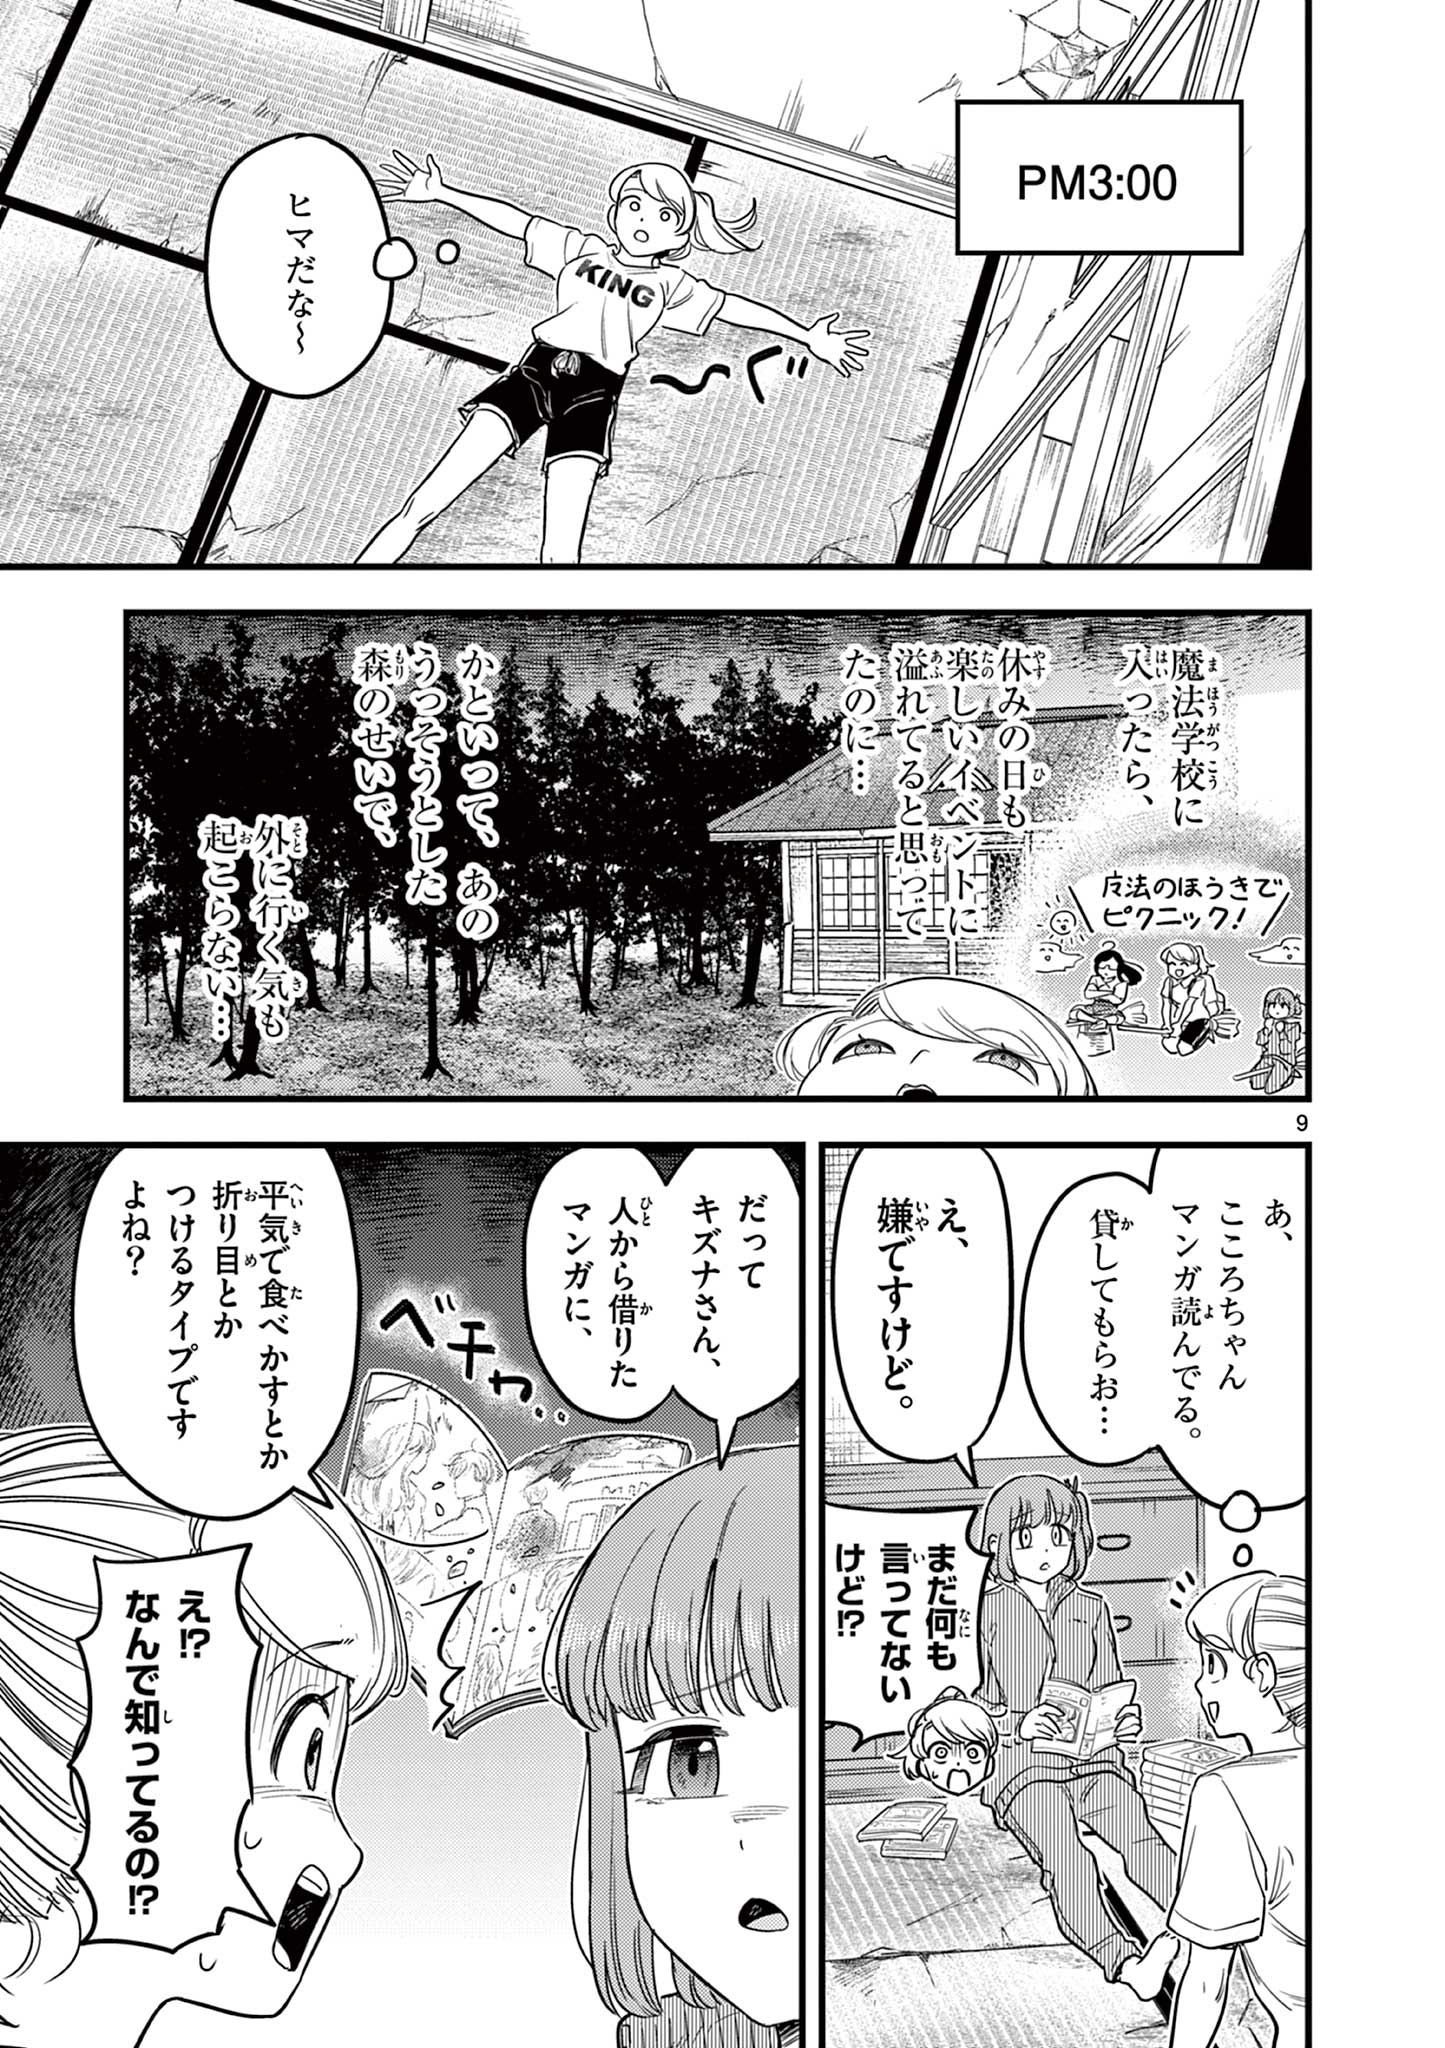 Kuro Mahou Ryou no Sanakunin - Chapter 12 - Page 9